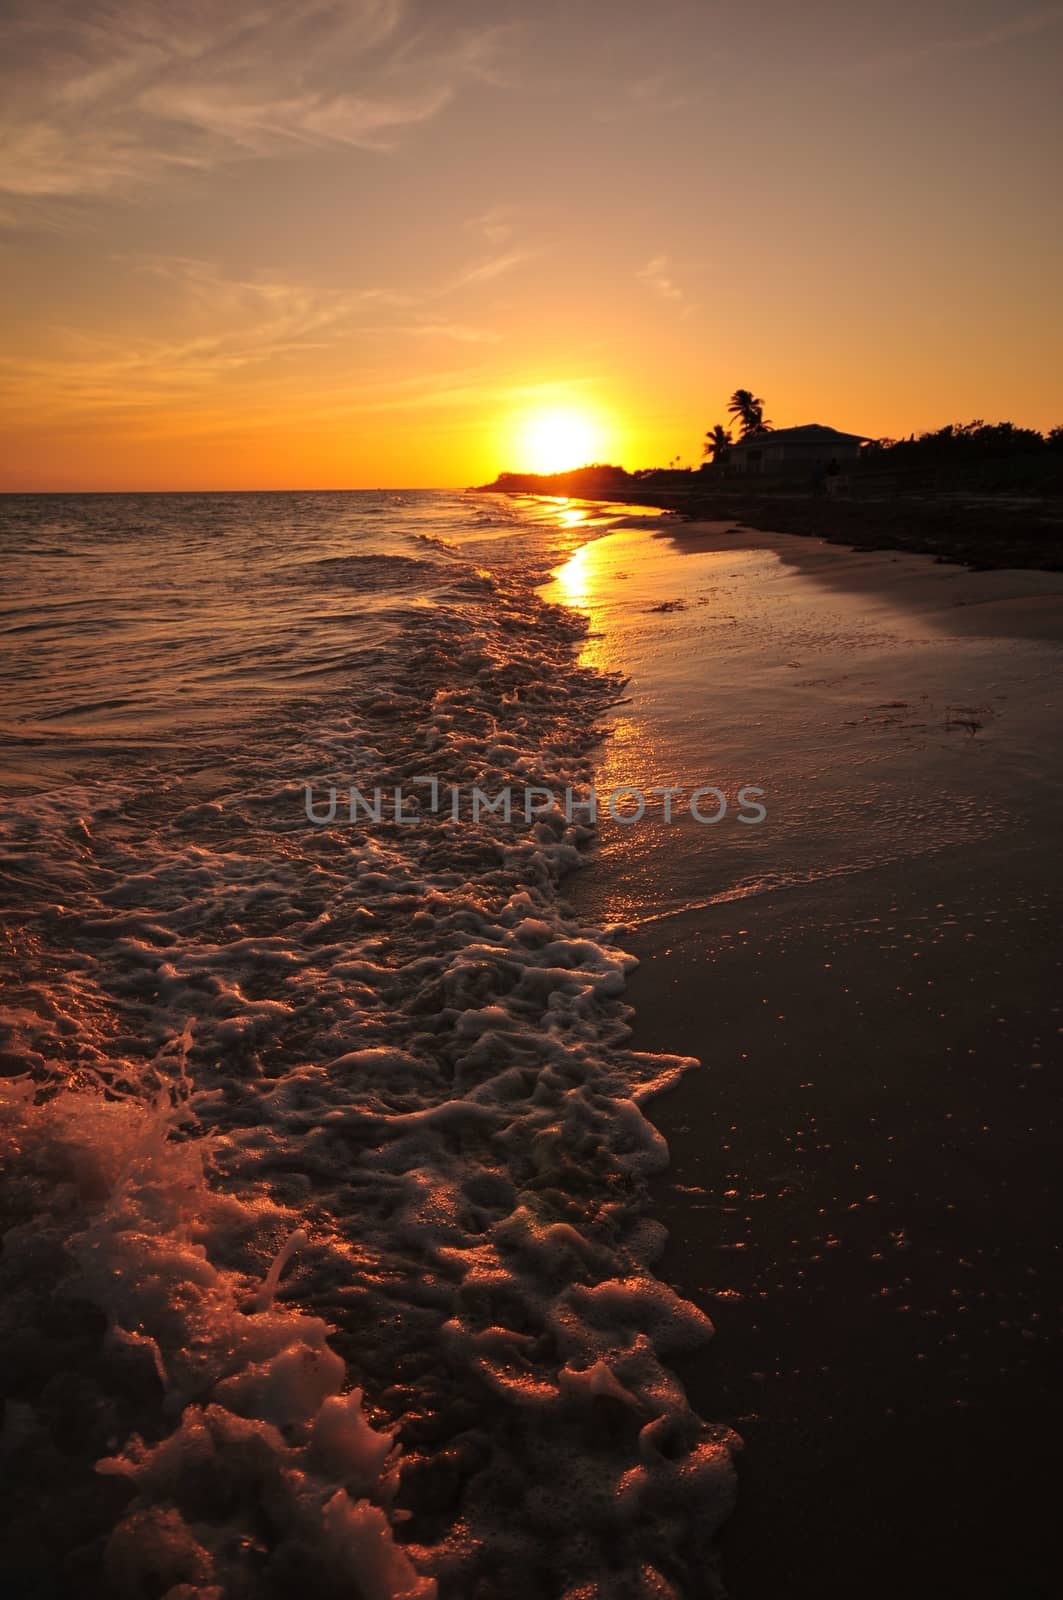 Florida Keys Sunset. Calm Ocean Waters near Sunset. Vertical Photo. Florida Keys, USA.